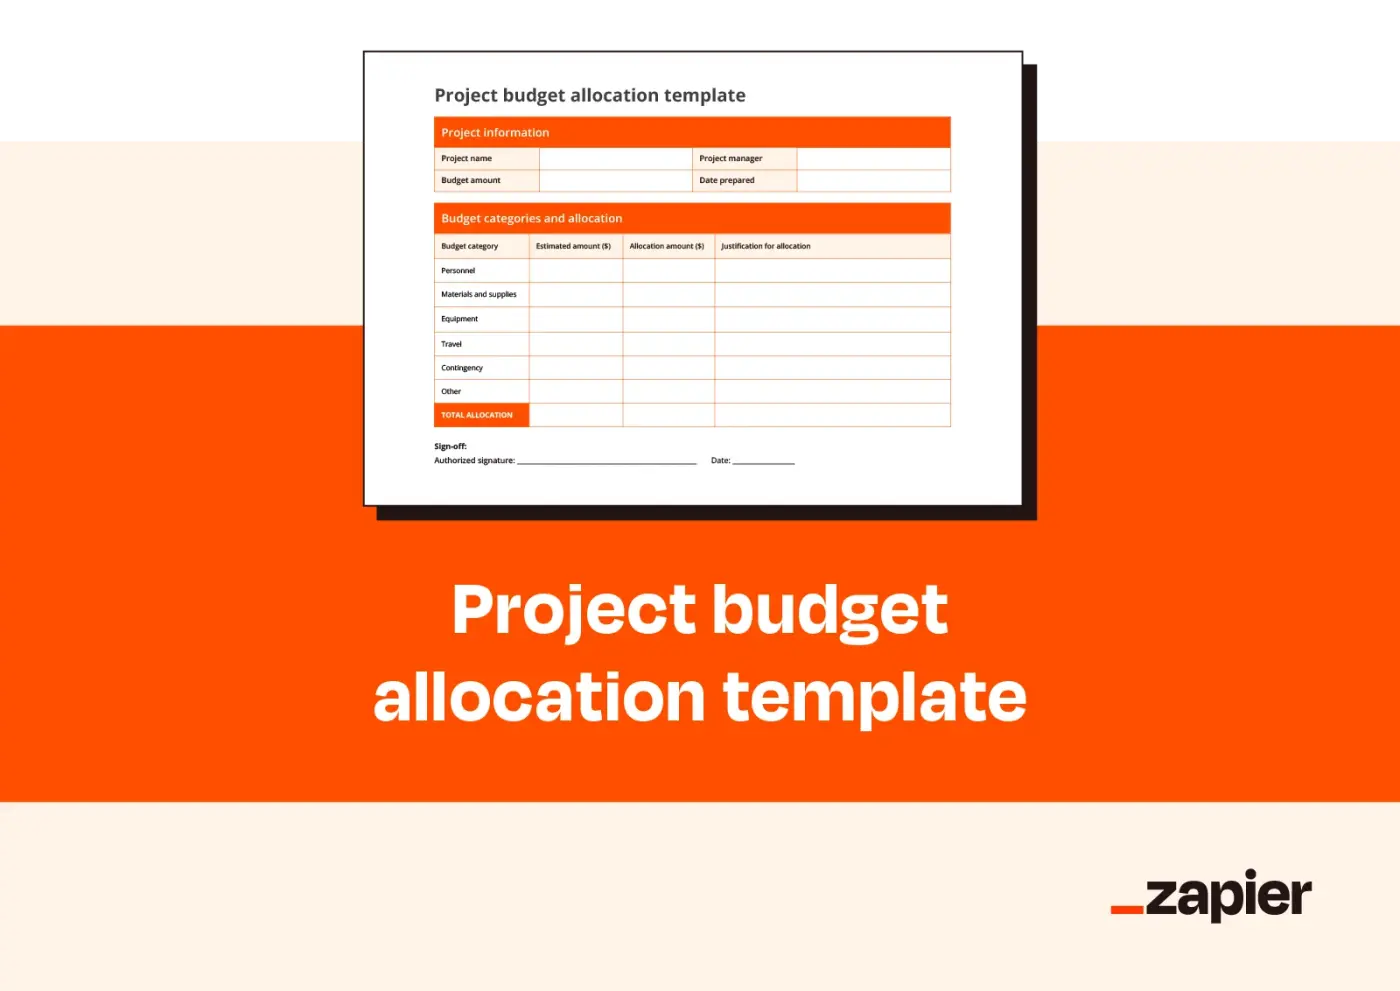 Mockup showcasing Zapier's project budget allocation template